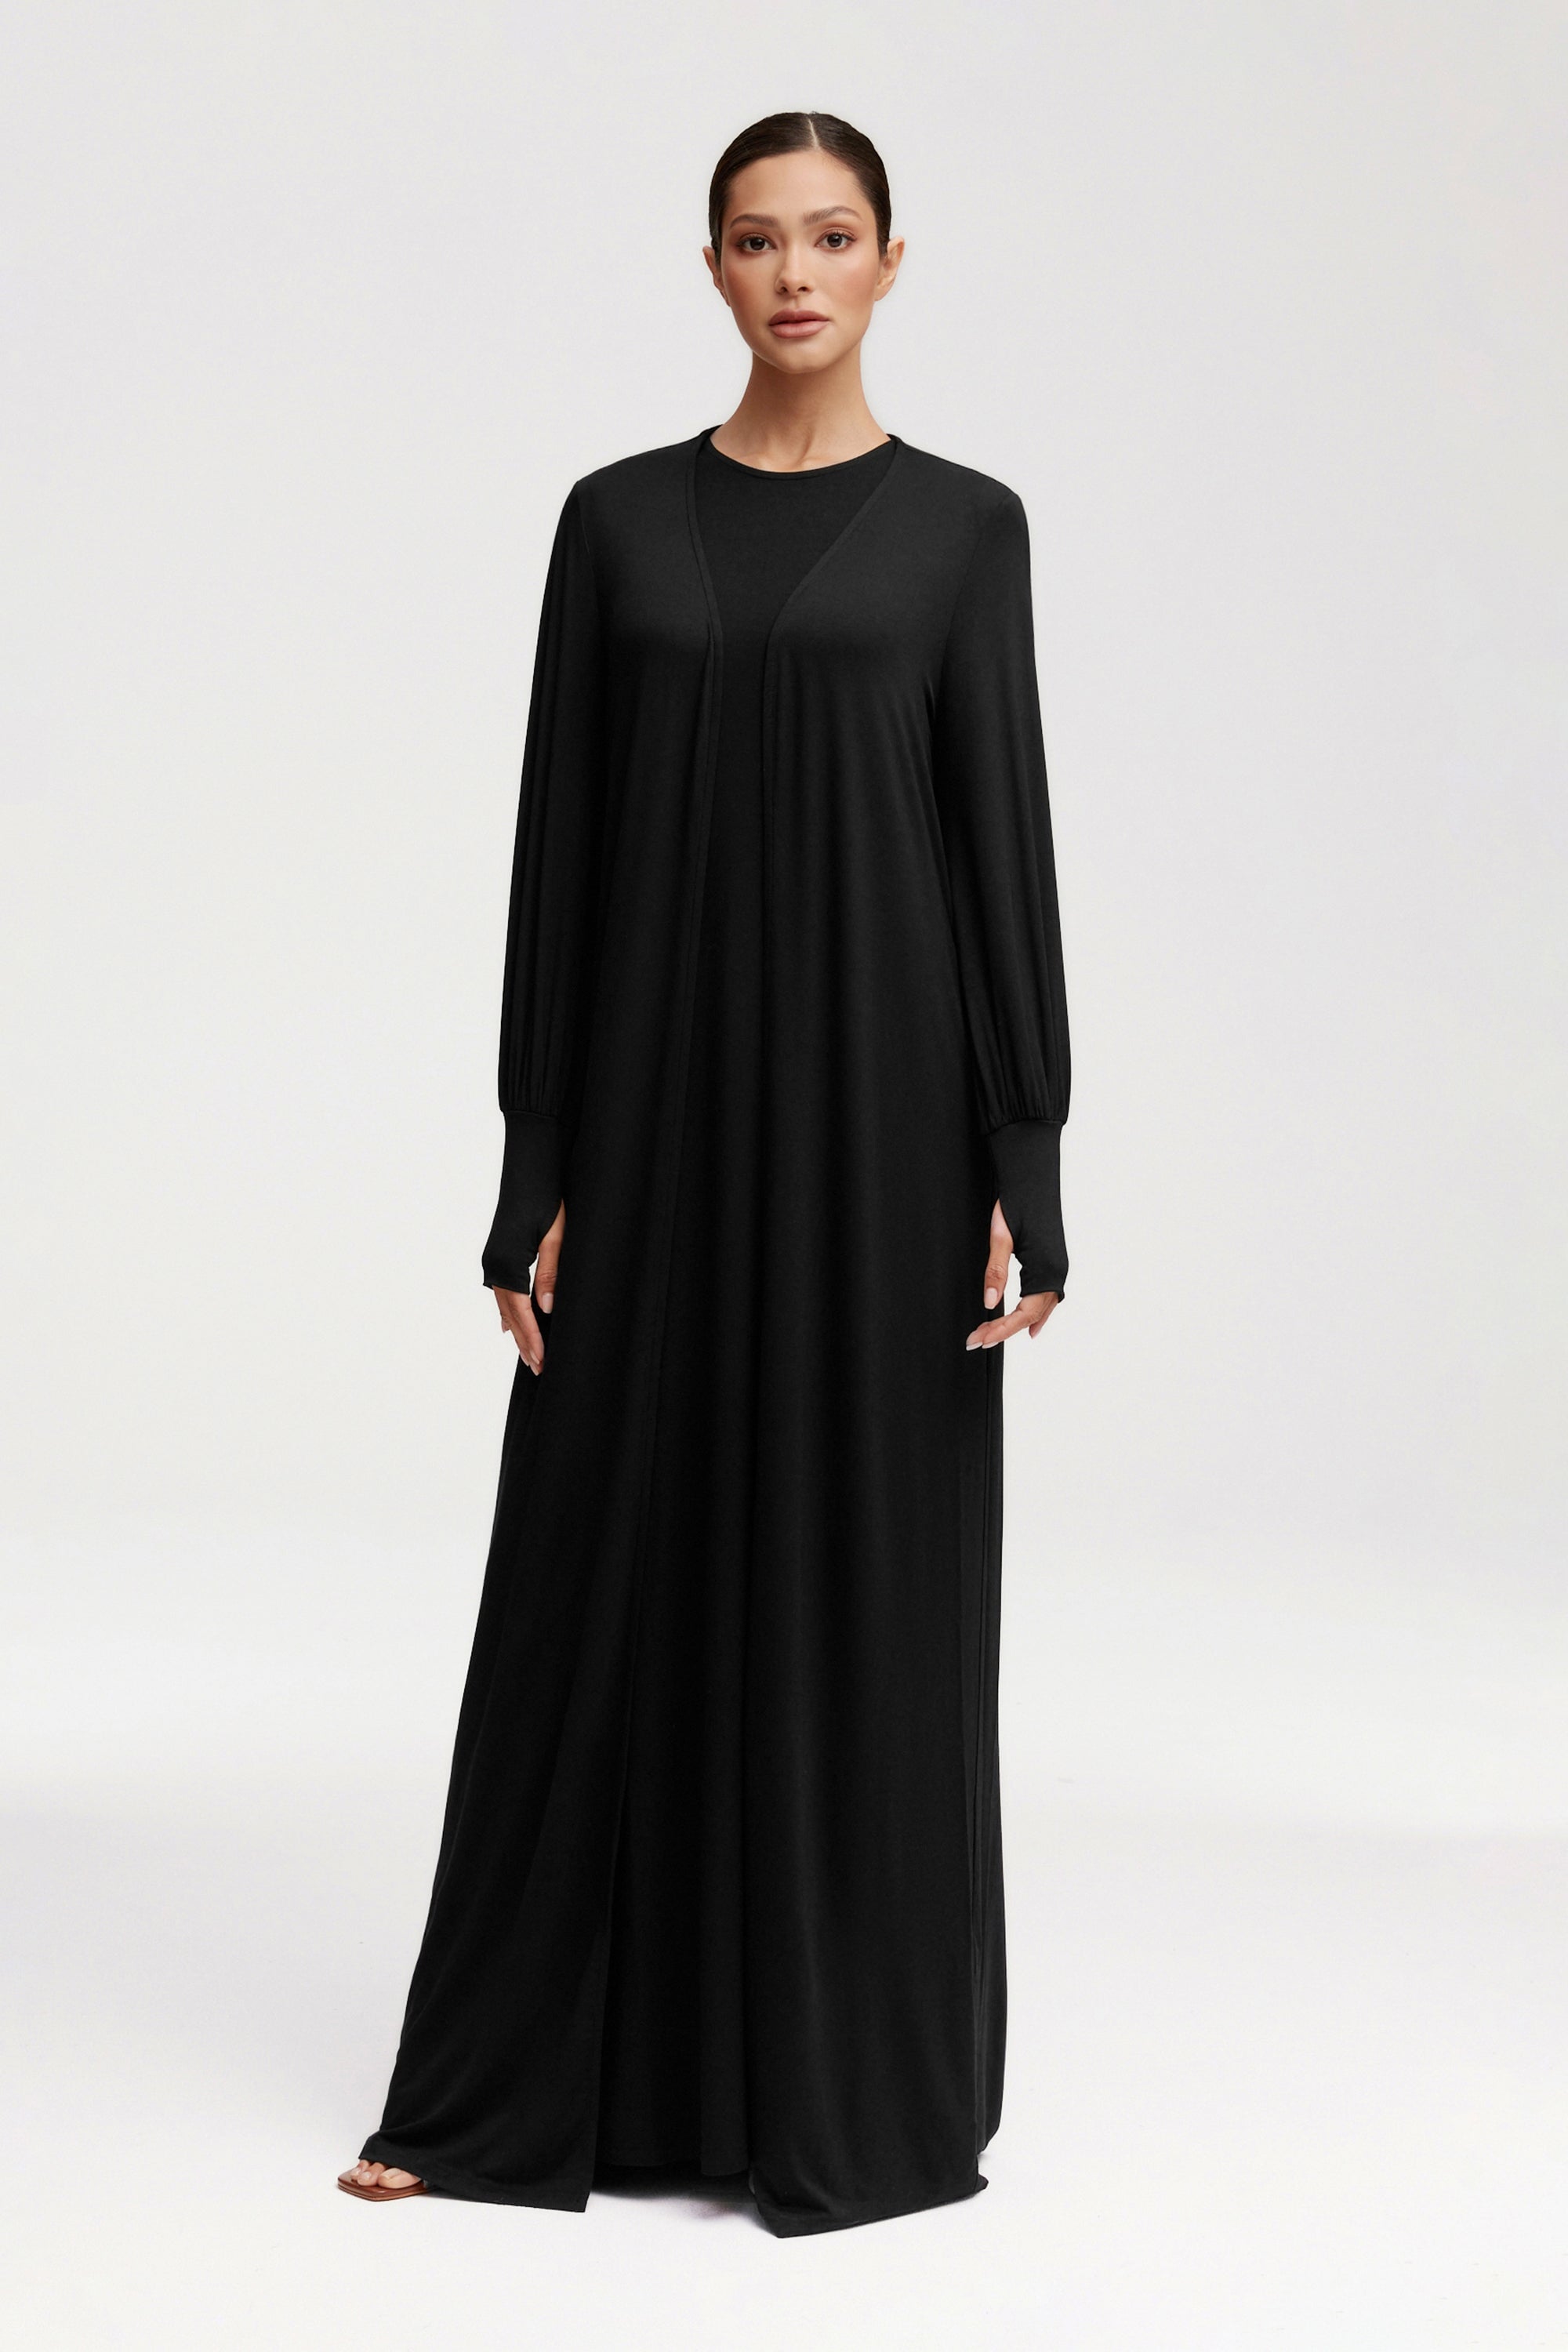 Jenin Jersey Open Abaya & Maxi Dress Set - Black Clothing saigonodysseyhotel 